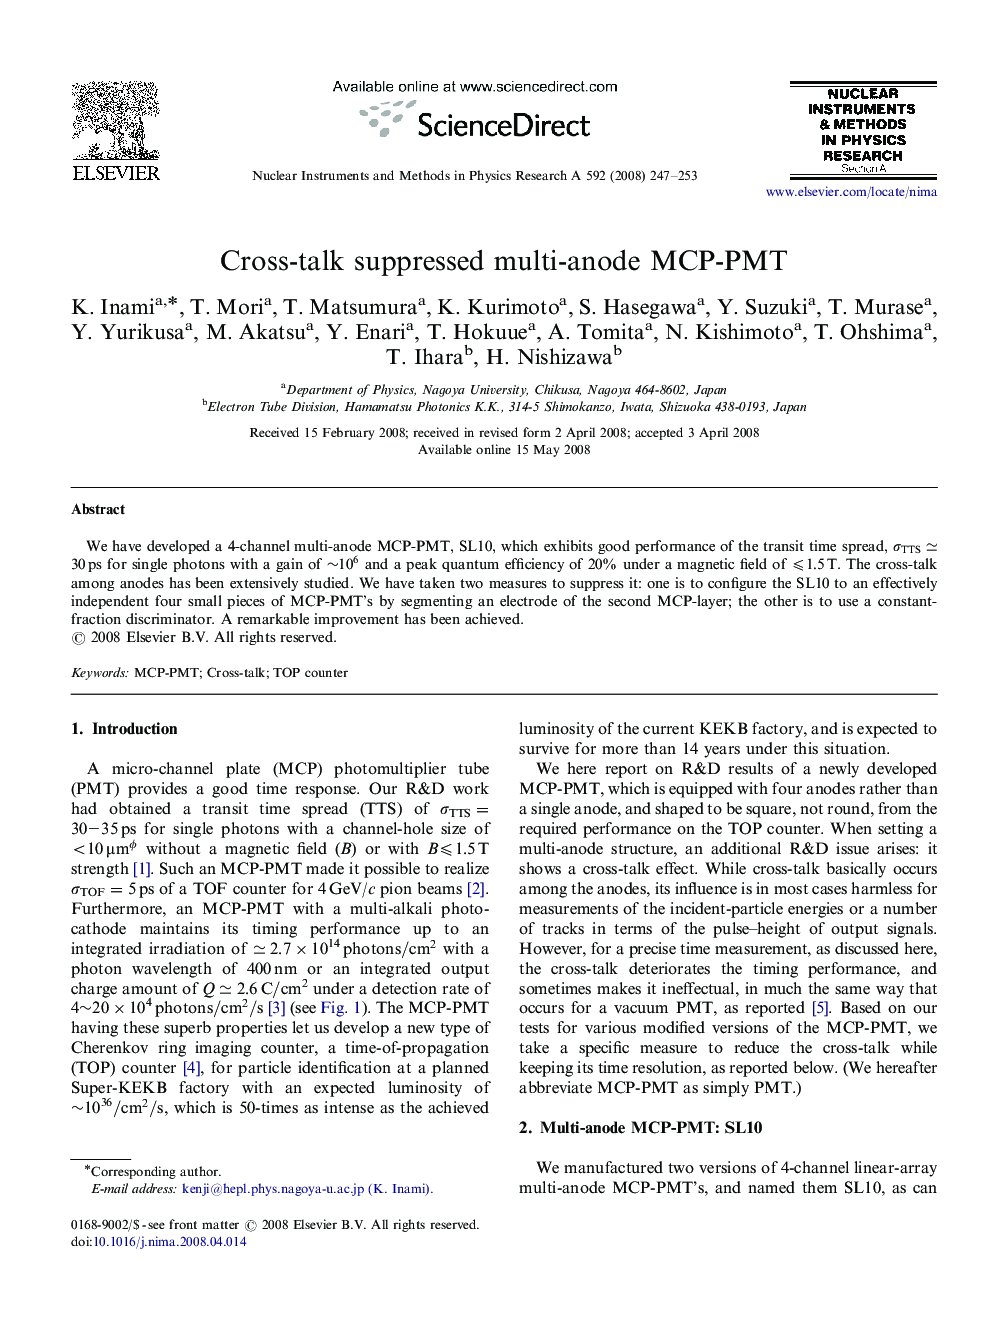 Cross-talk suppressed multi-anode MCP-PMT